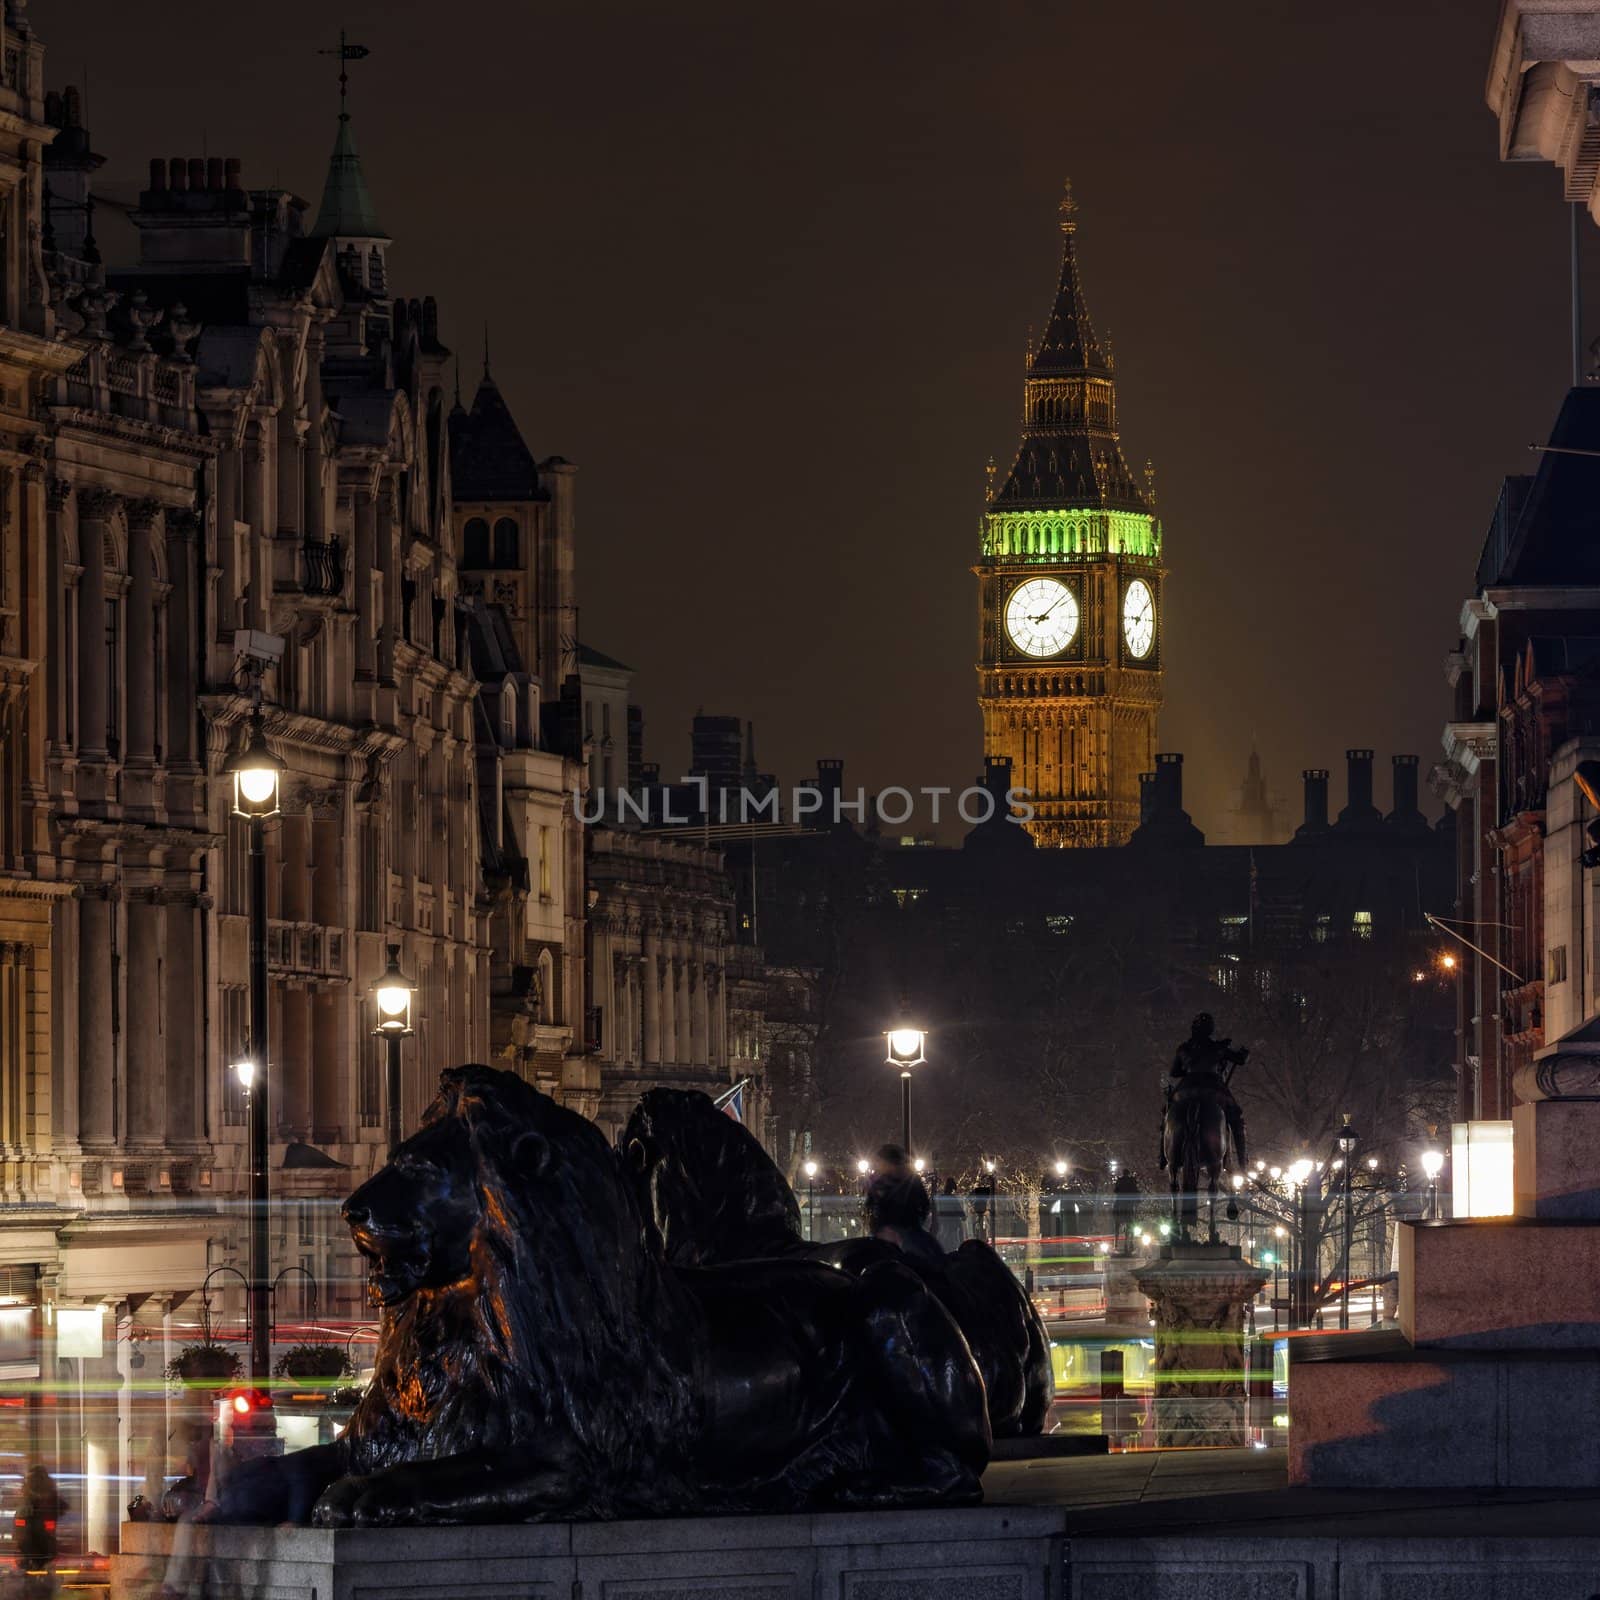 Elizabeth Tower seen from Trafalgar Square at night by dutourdumonde